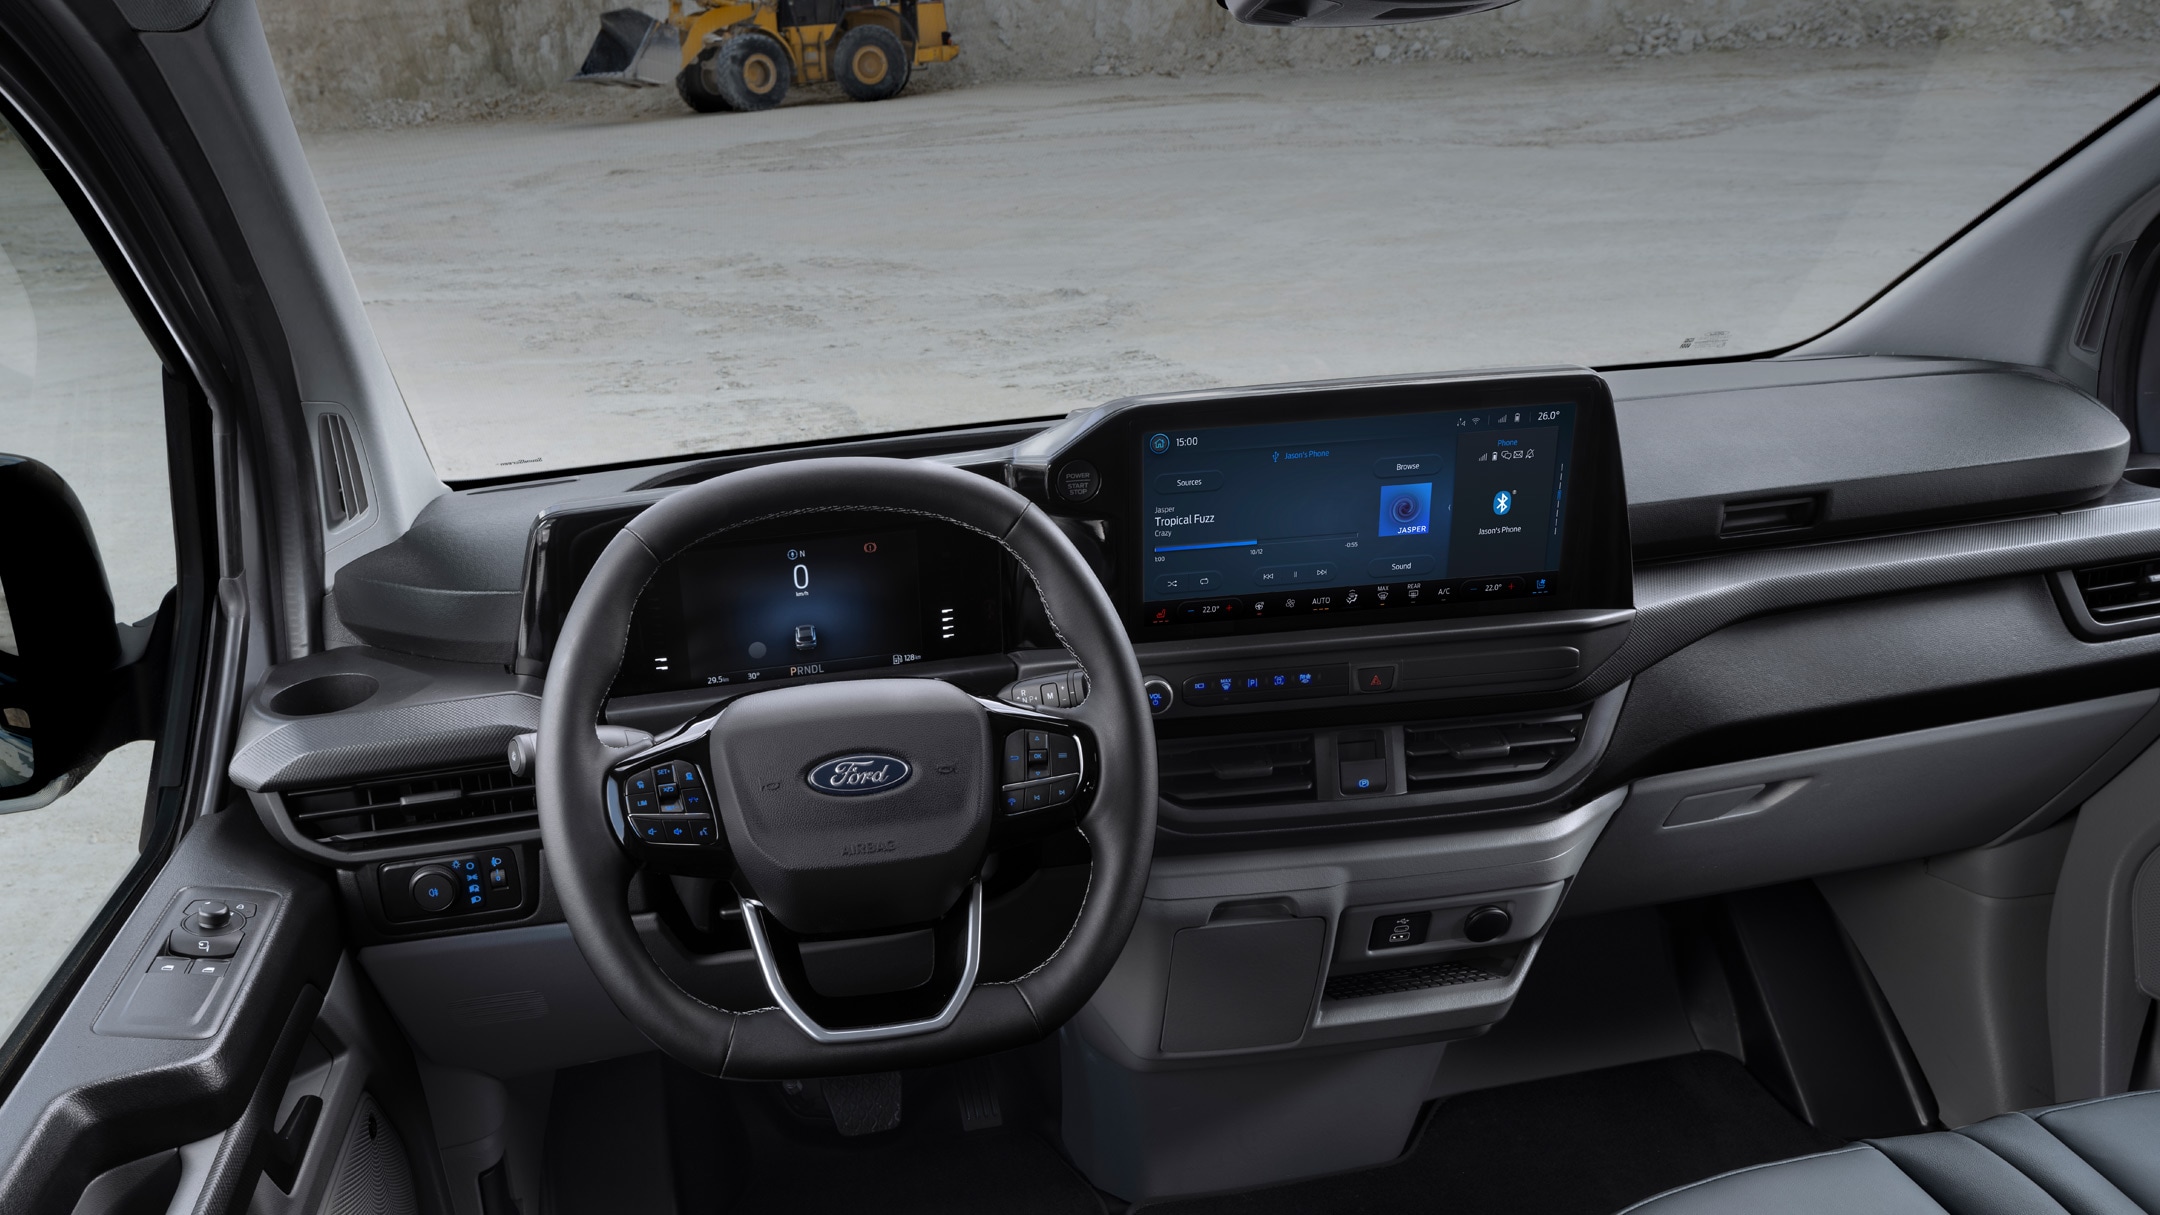 Ford Transit Custom interior view